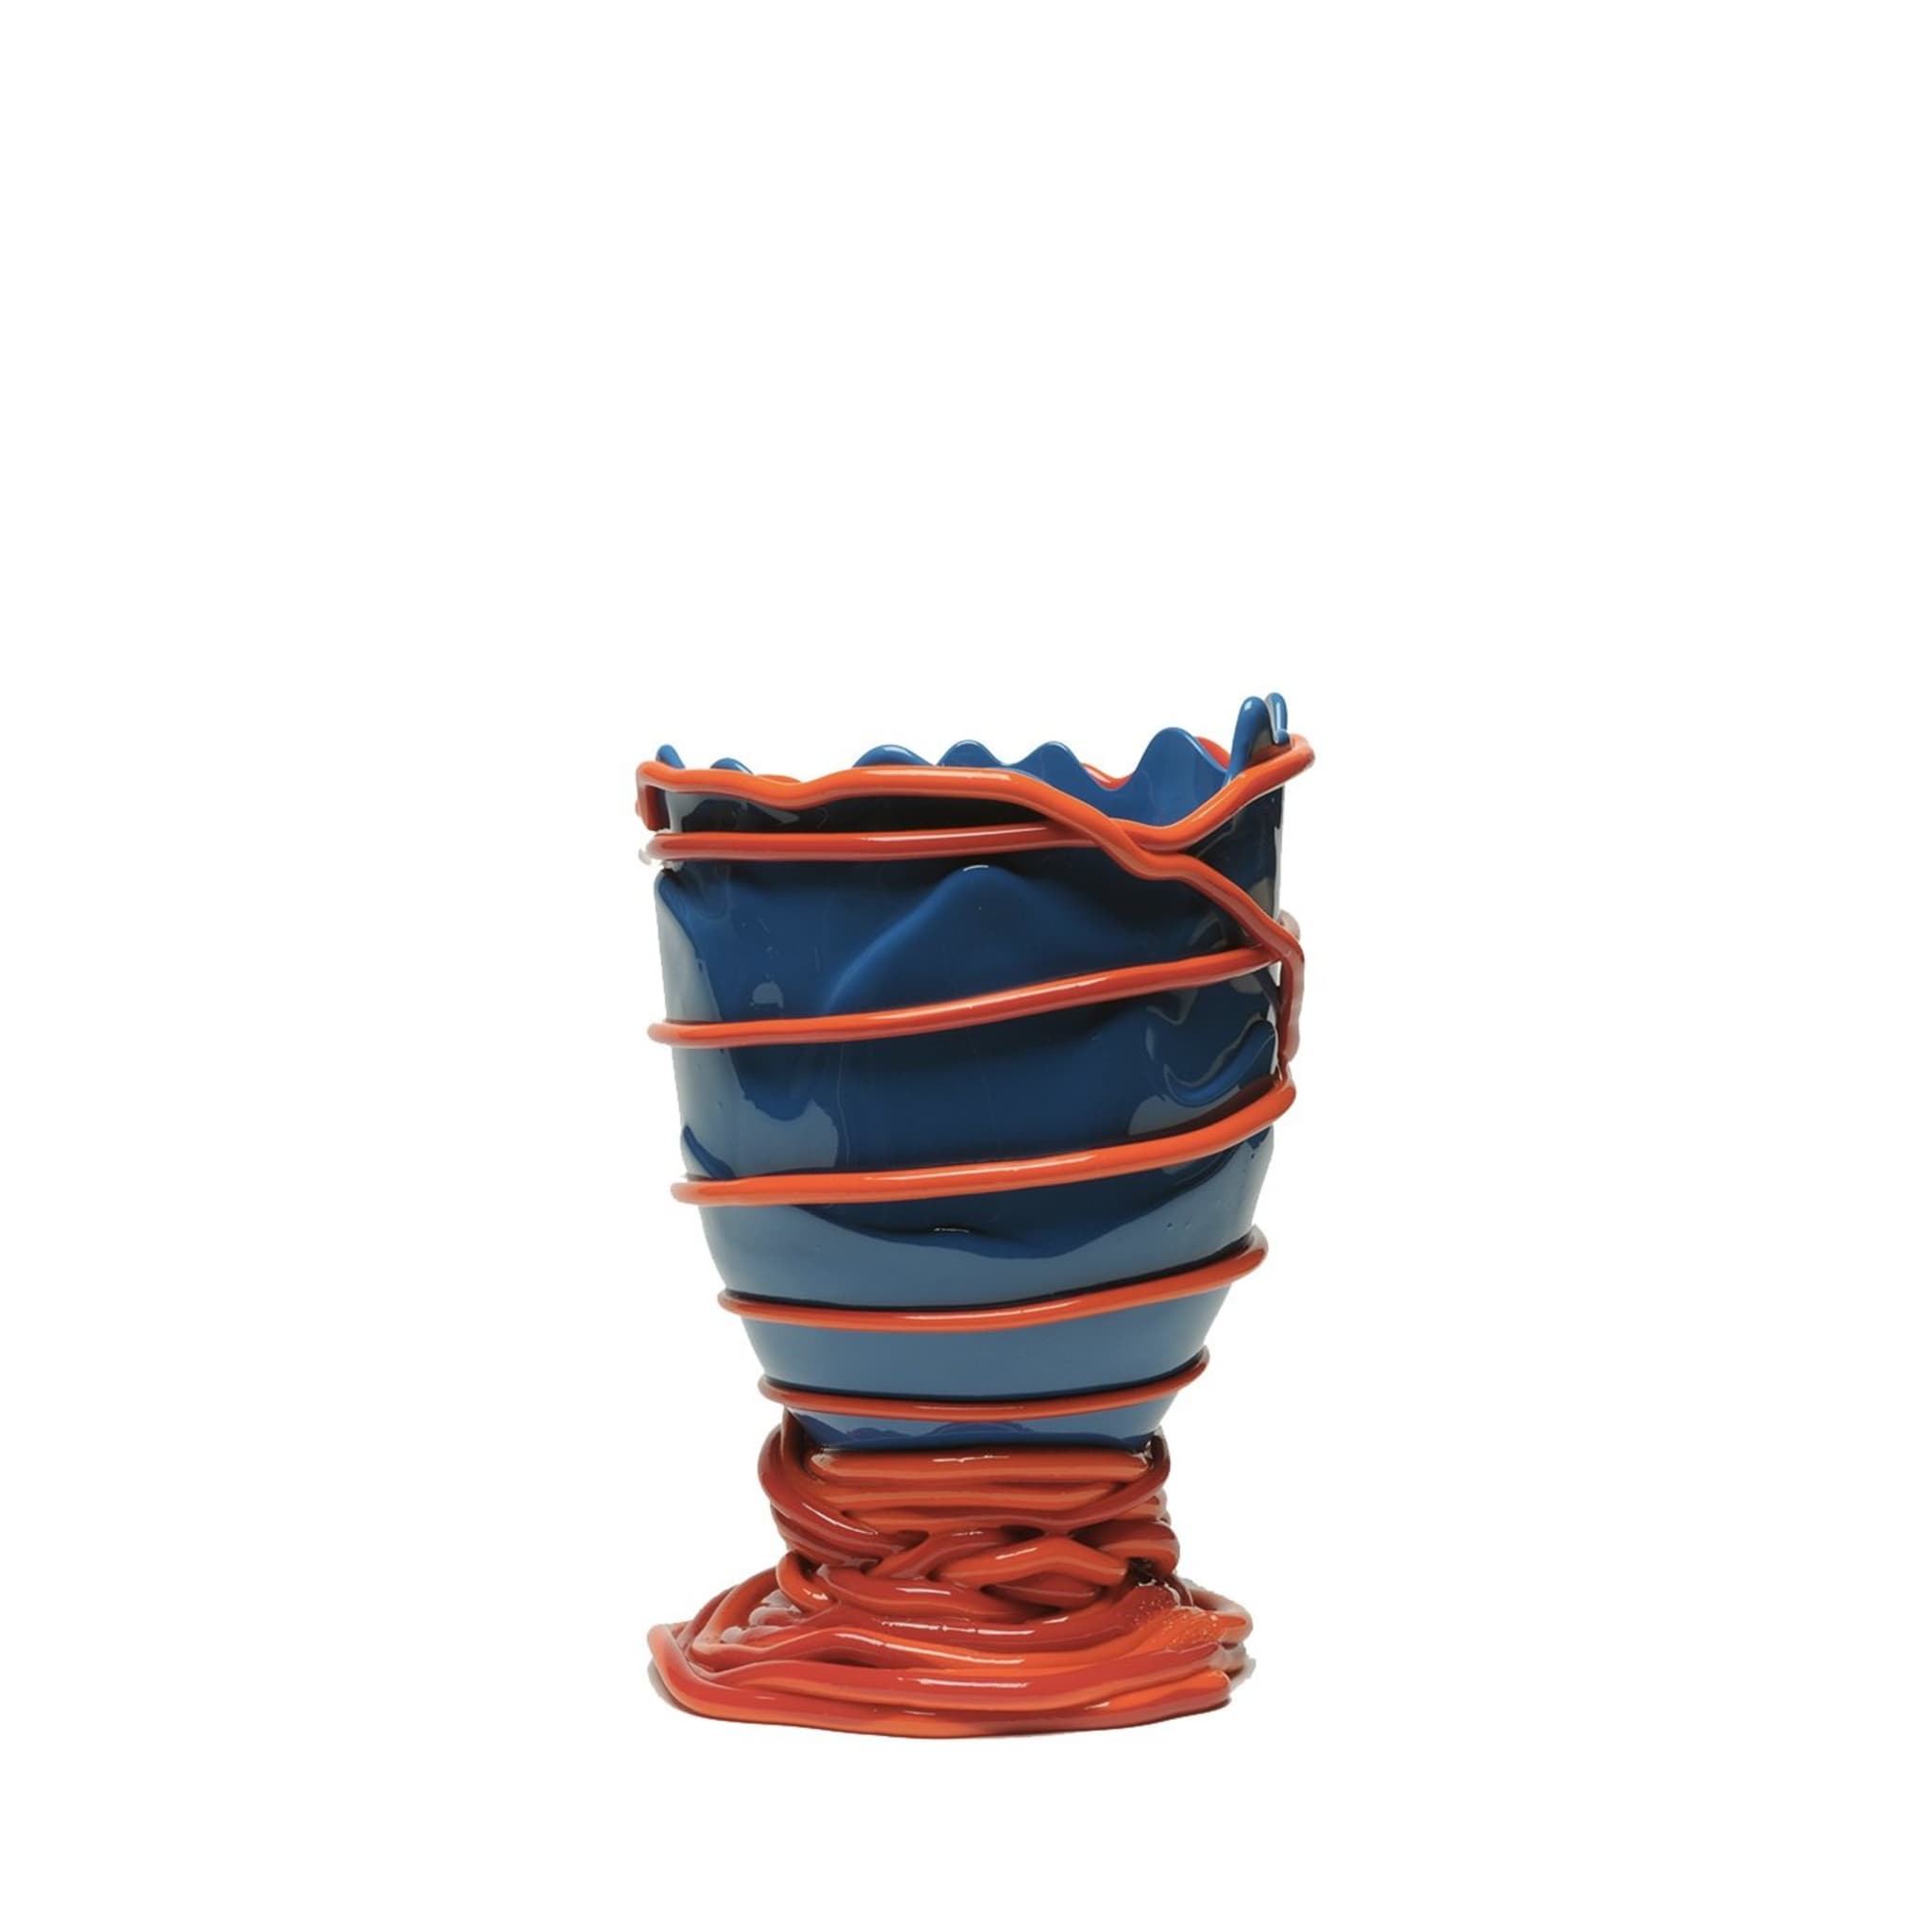 Pompitu II Medium Red and Blue Vase by Gaetano Pesce - Alternative view 1